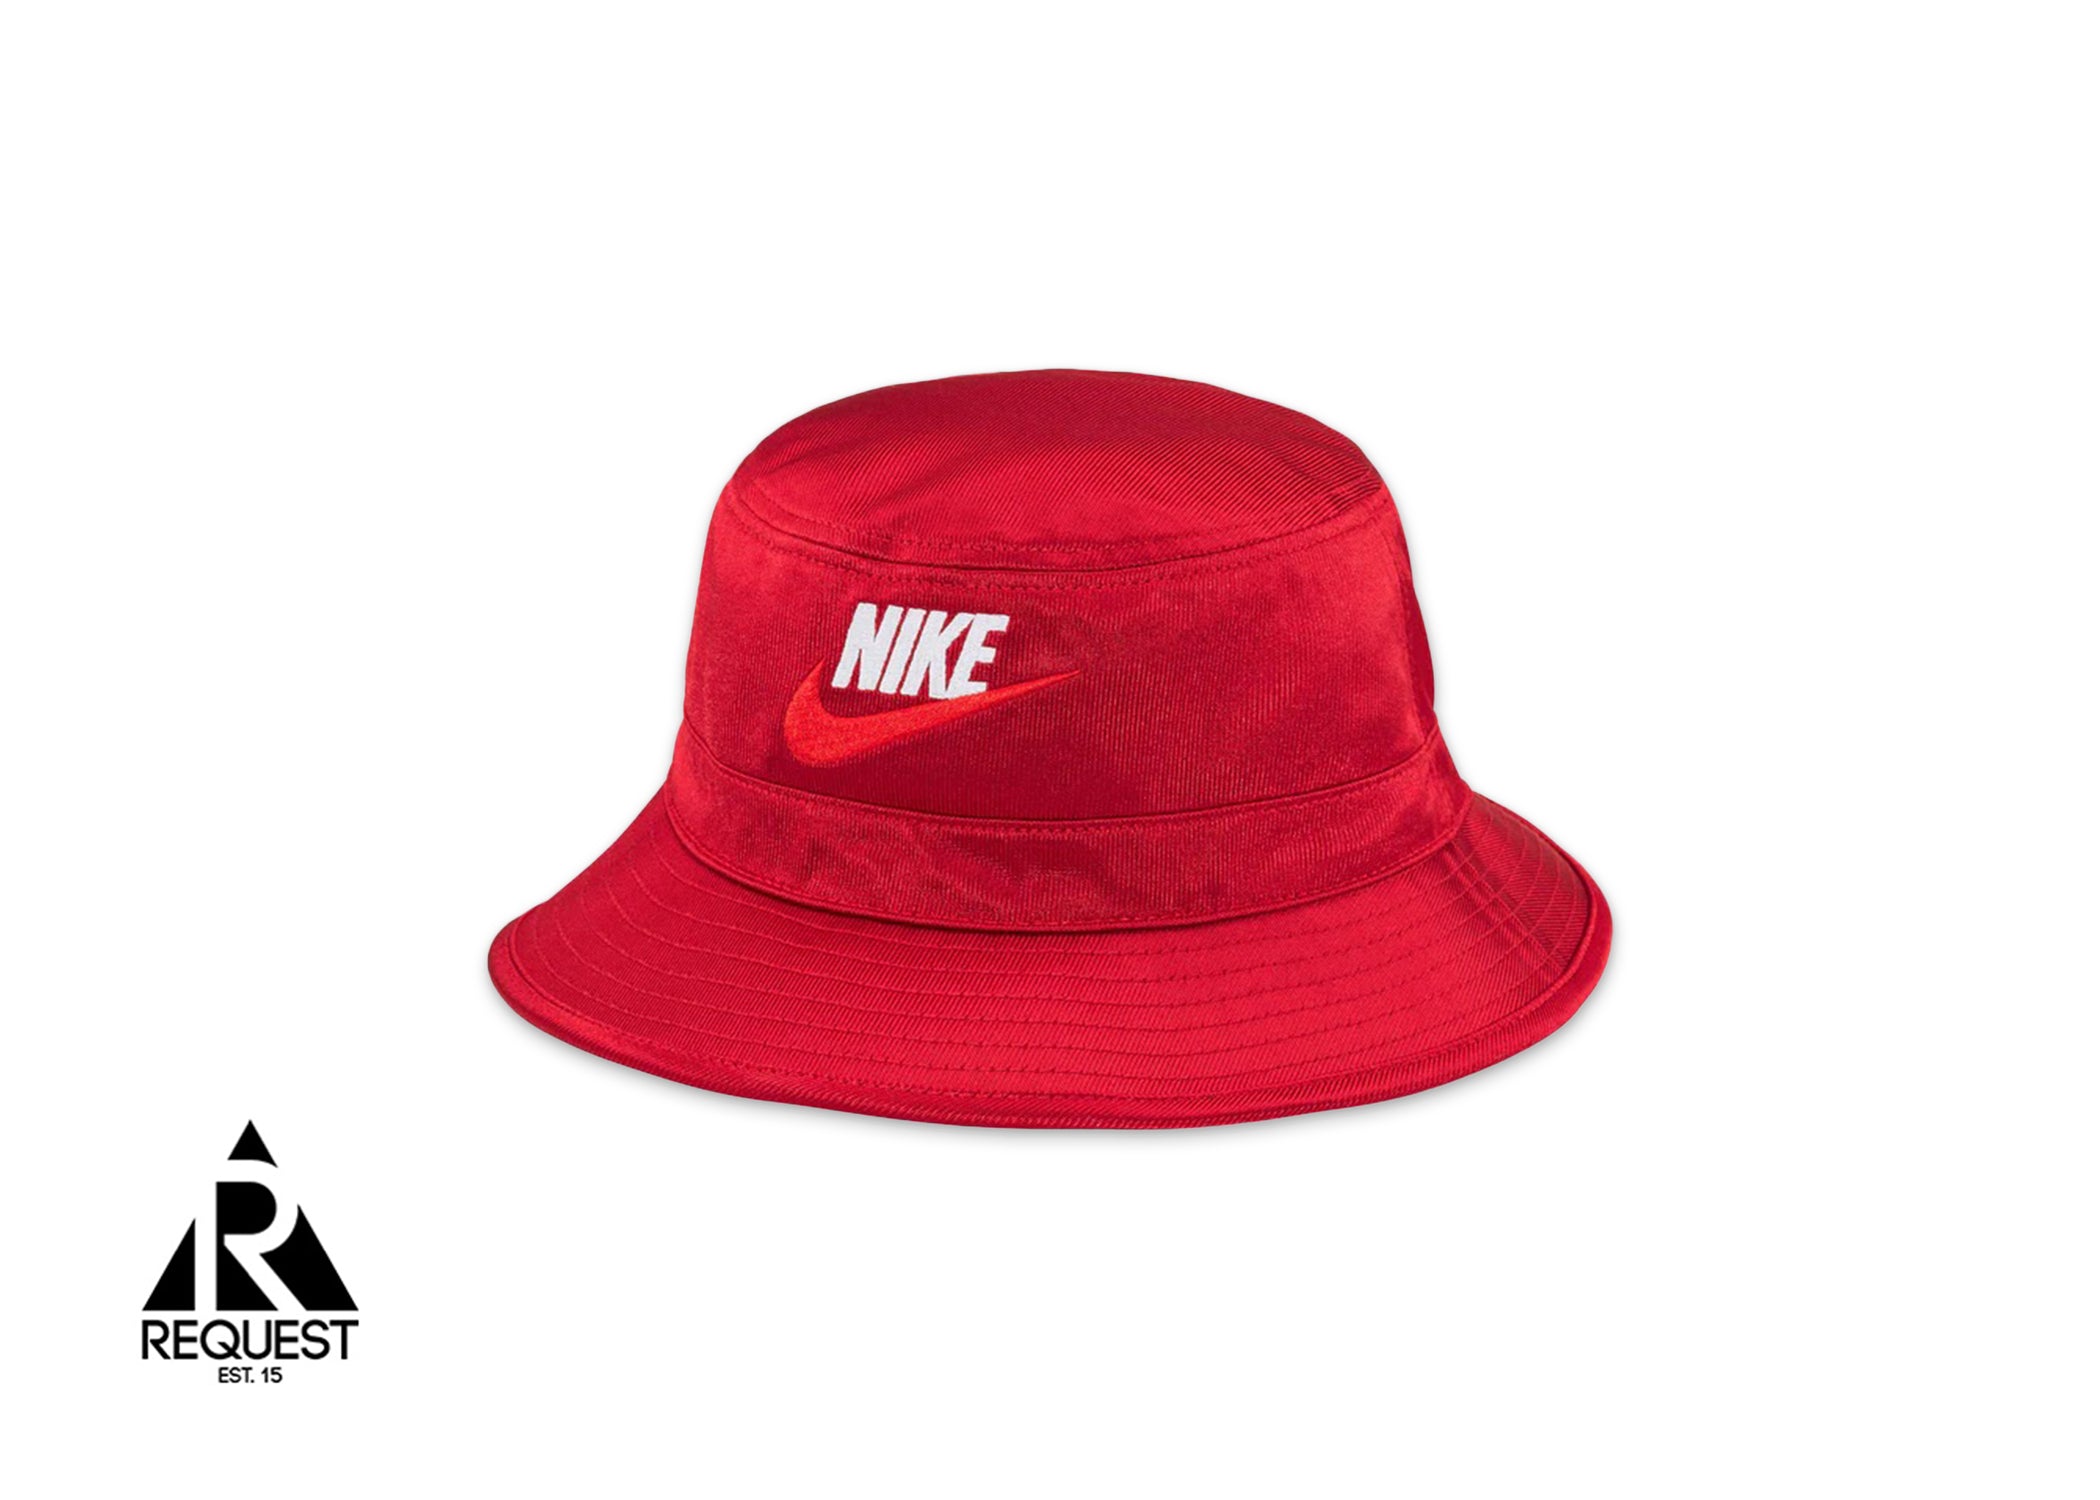 Supreme x Nike Dazzle Crusher "Red"